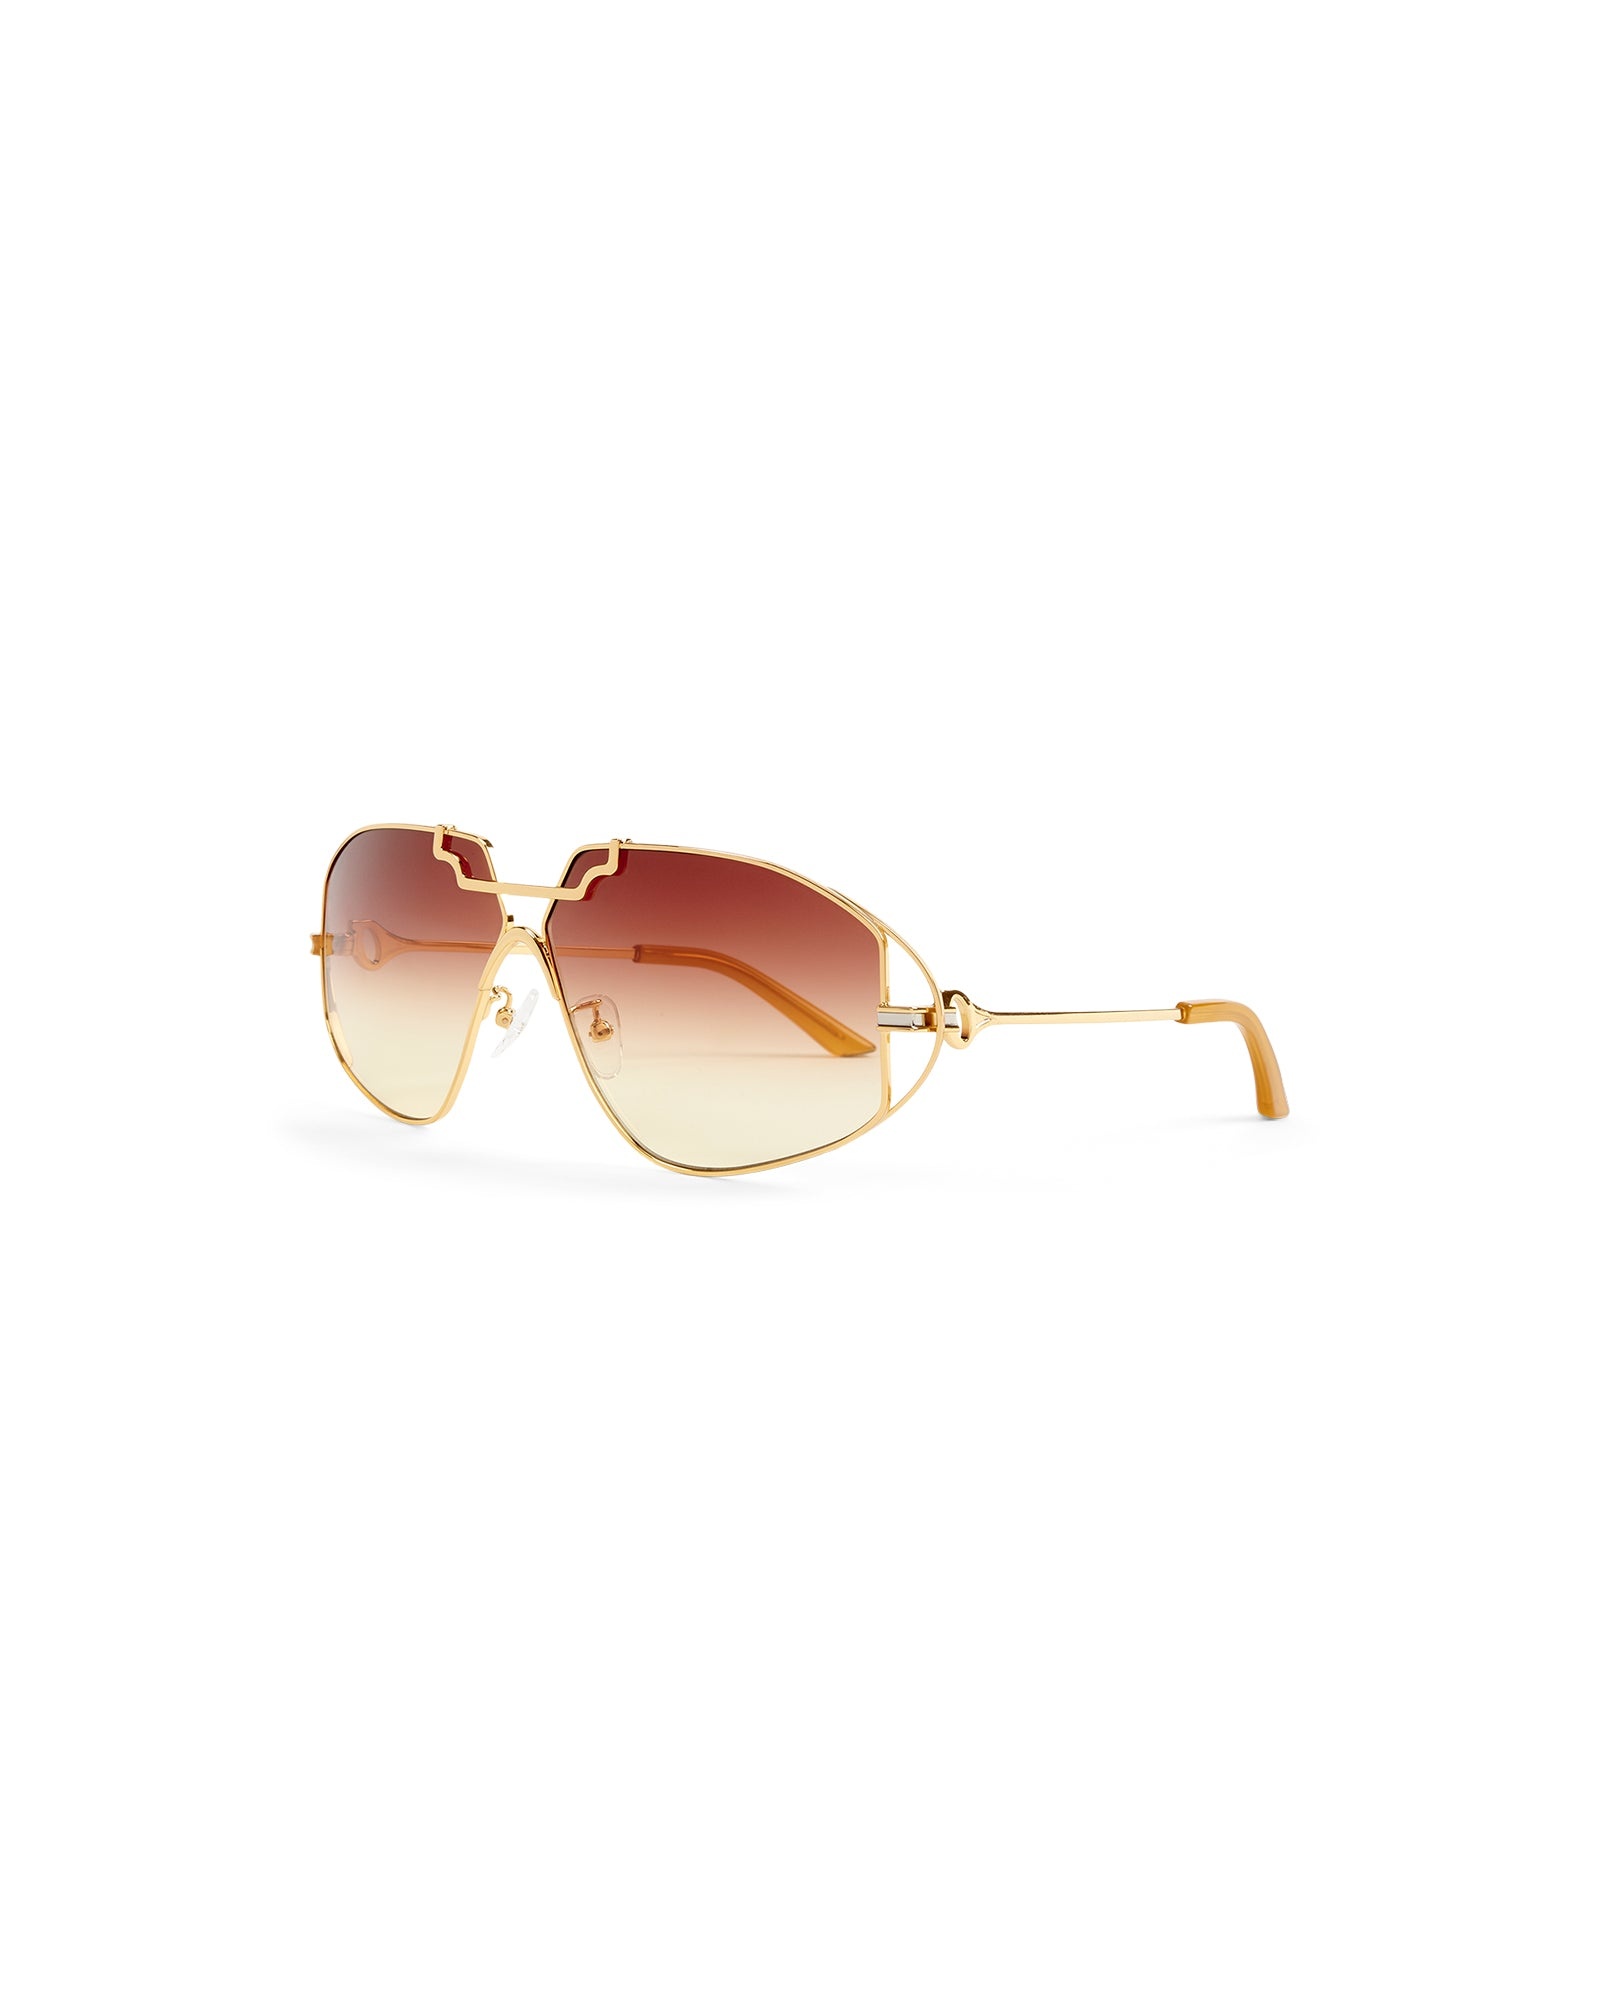 Orange & Gold The Avenida Sunglasses - 1